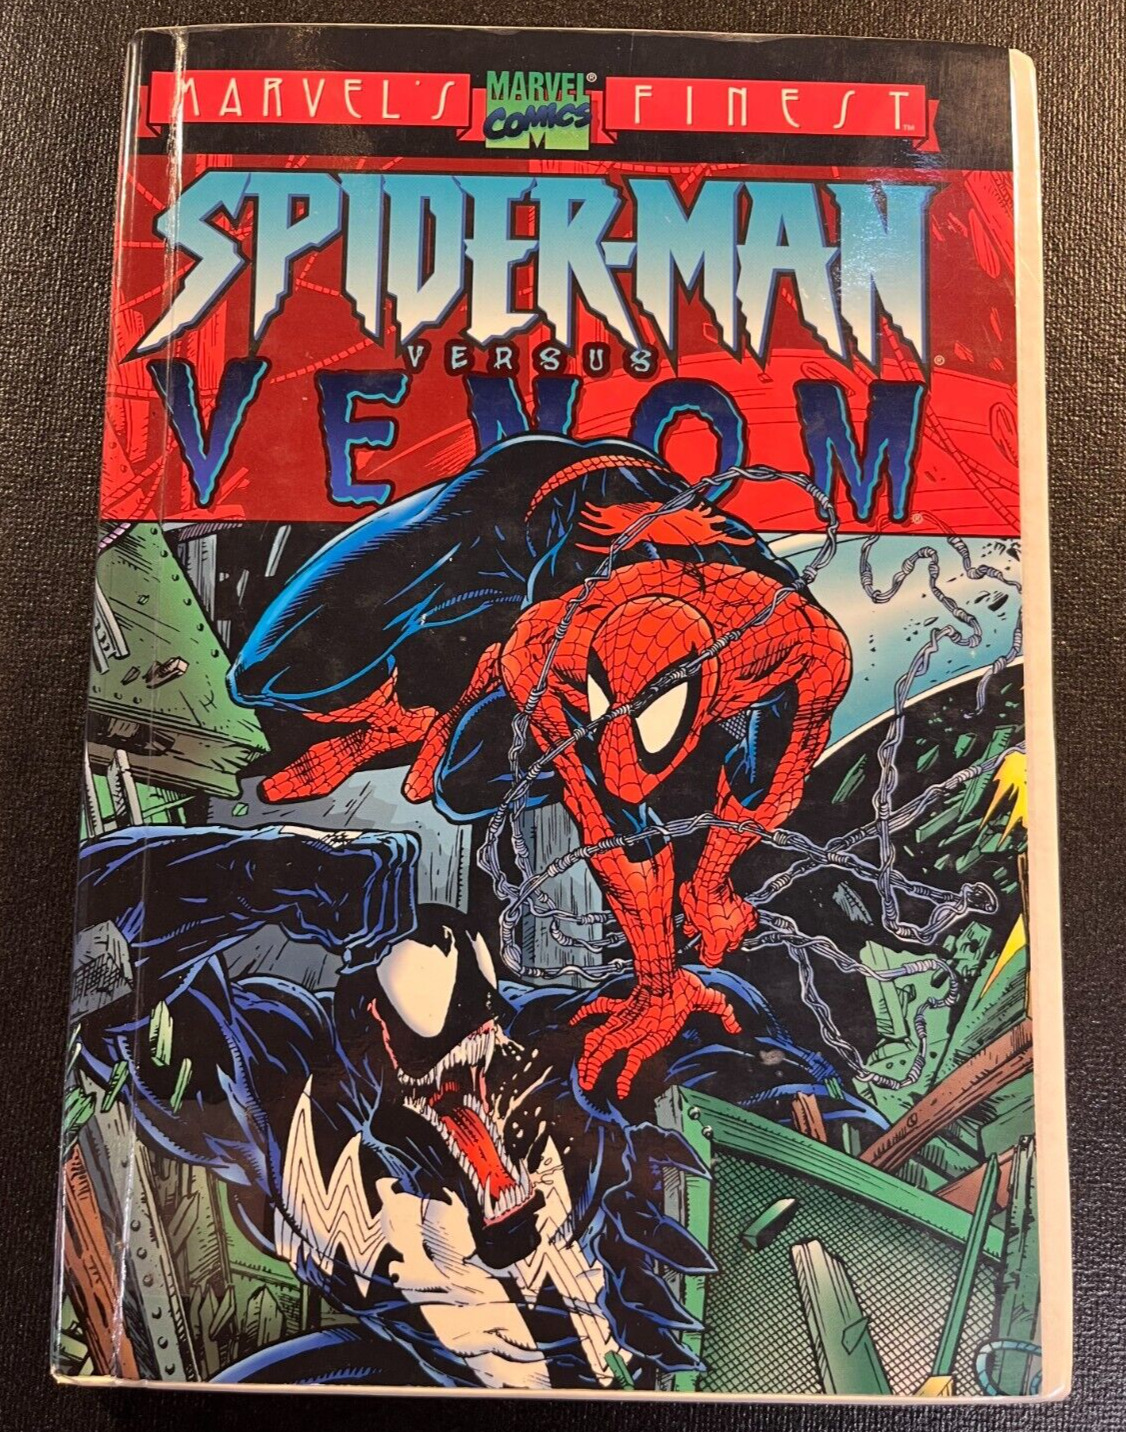 Spider-man Versus Venom 1 HARD COVER Very RARE Marvel's Finest HC Graphic Novel